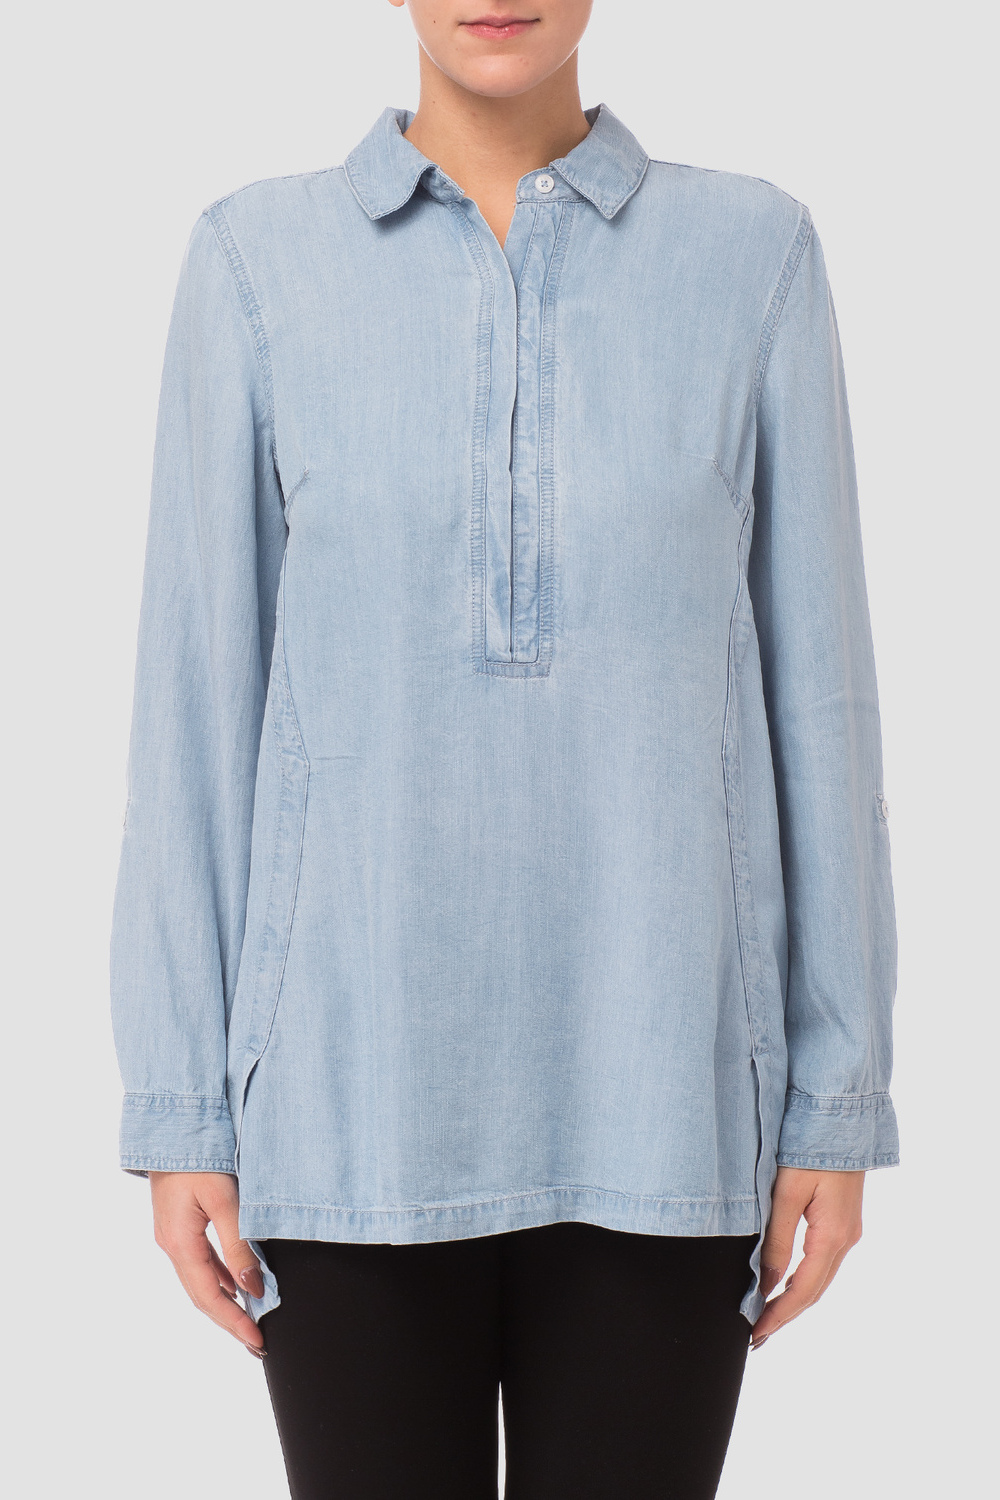 Joseph Ribkoff blouse style 181950. Light Denim Blue